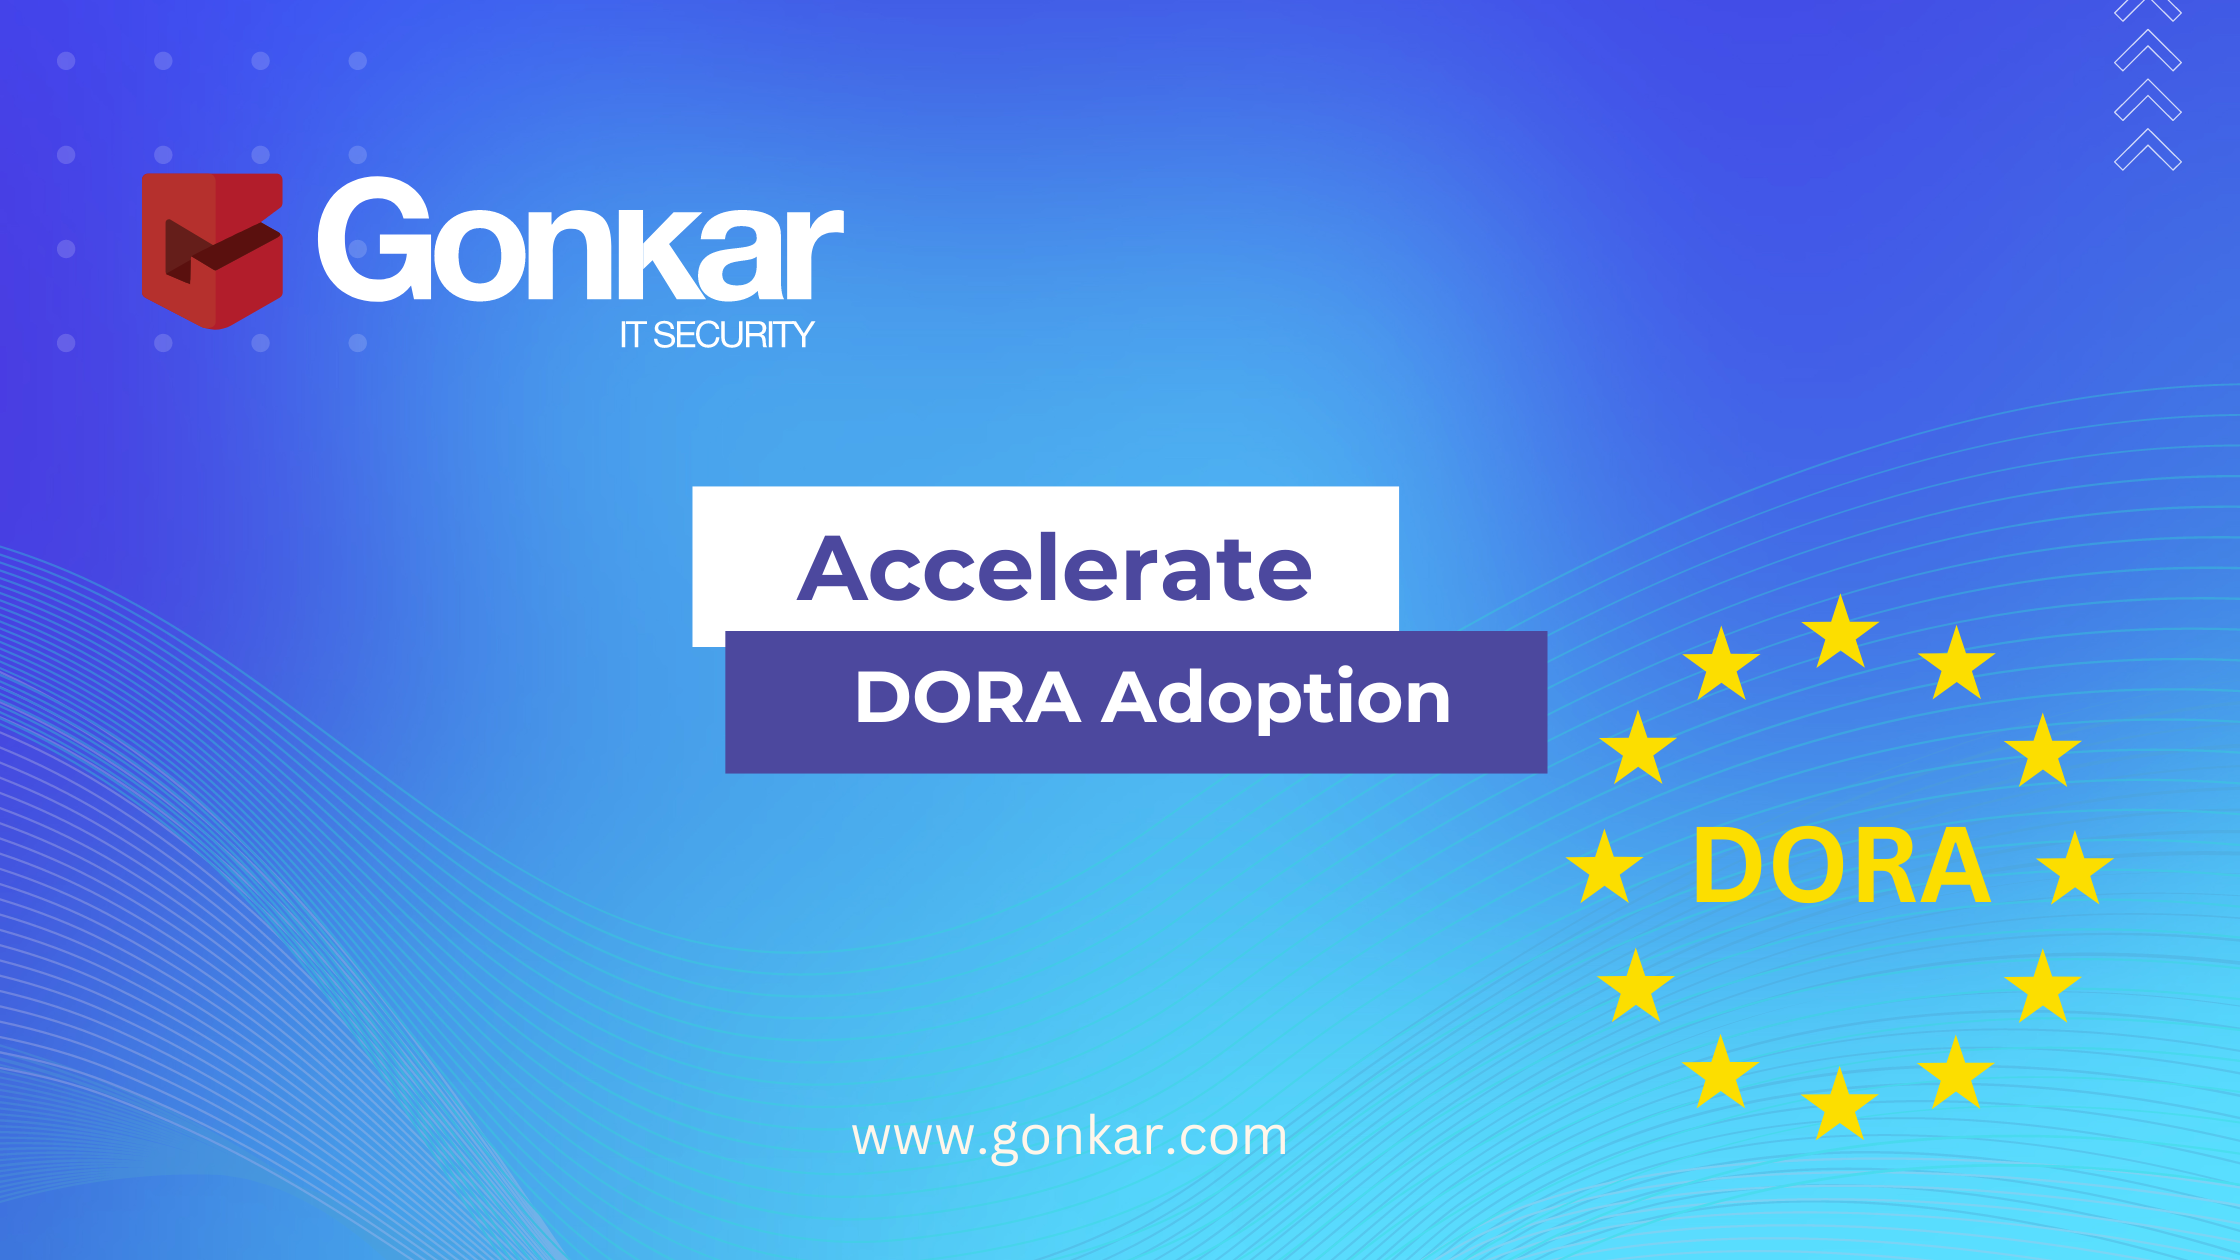 Gonkar Accelerate DORA Adoption